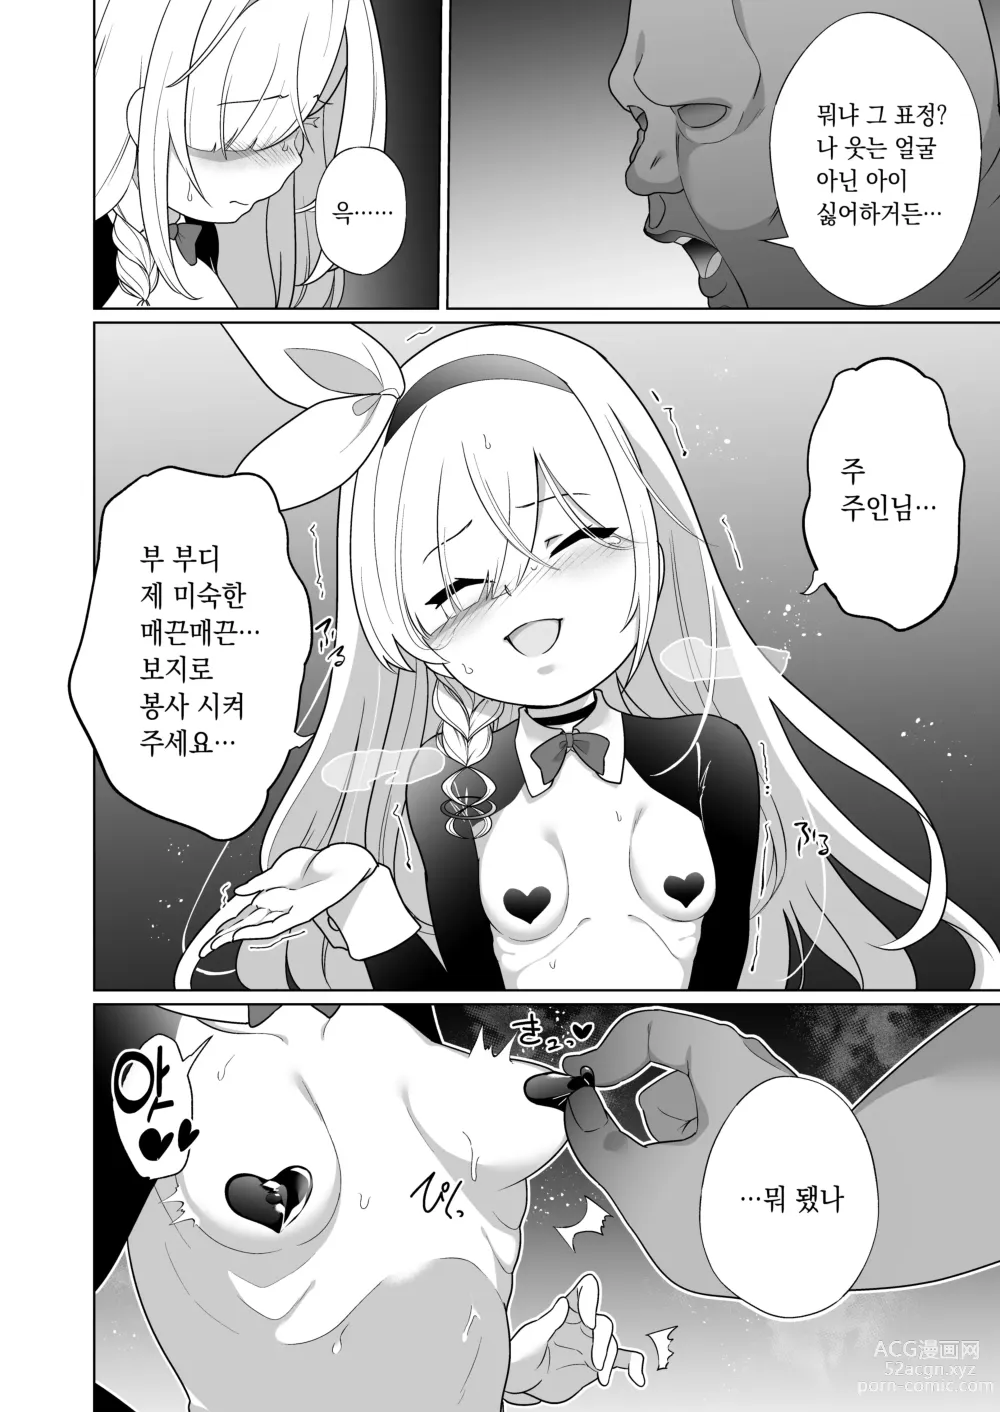 Page 21 of doujinshi 싫어하는 프라나가 기꺼이 봉사하는 이야기